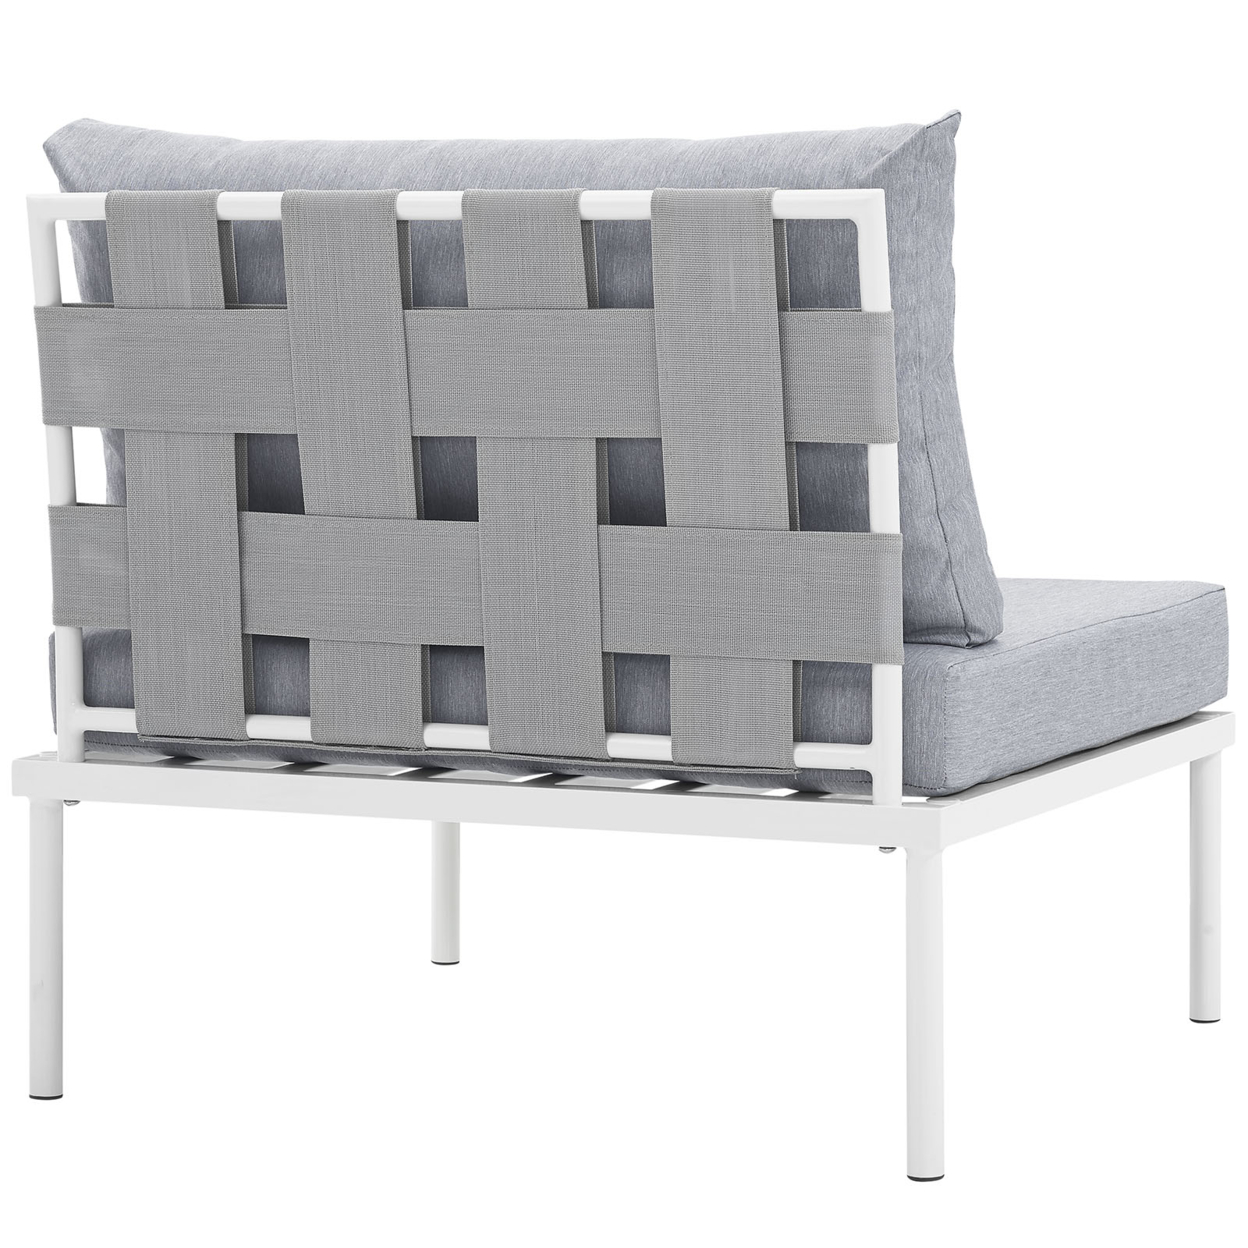 Harmony Armless Outdoor Patio Aluminum Chair White Gray - image 3 of 5